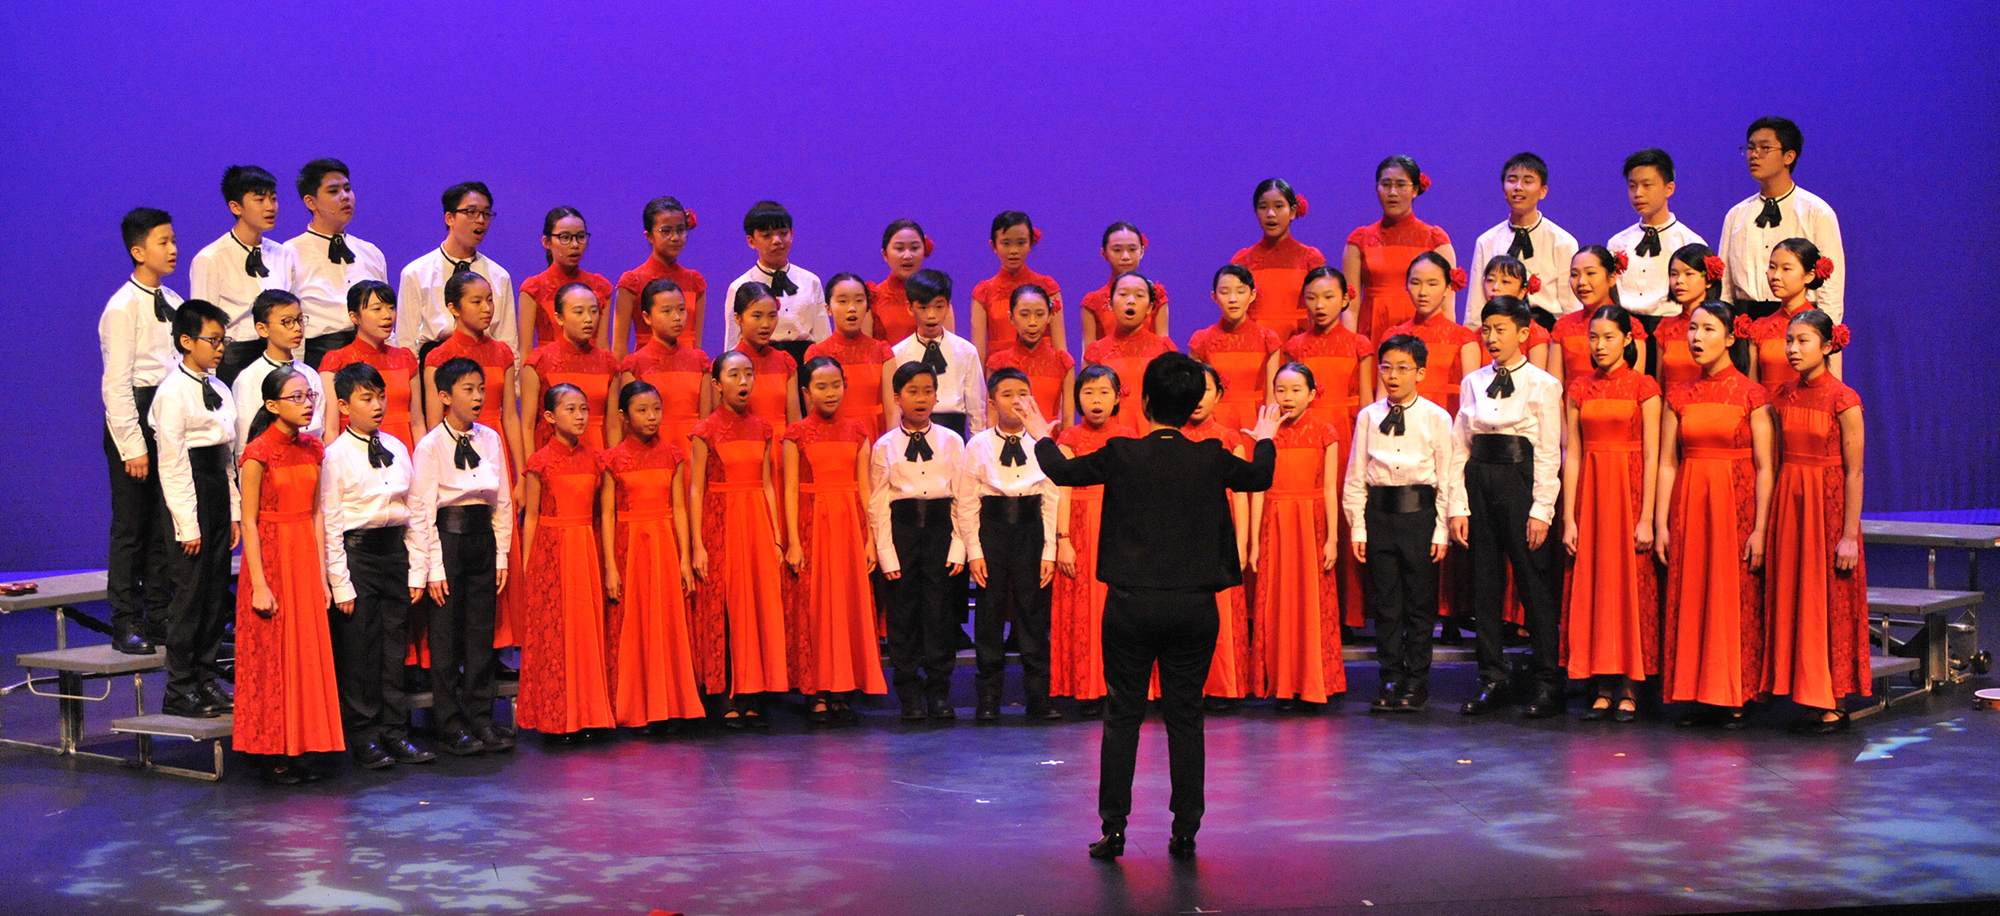 Concert Choir performance in Varity Show in Hong Kong Baptist University AC Hall